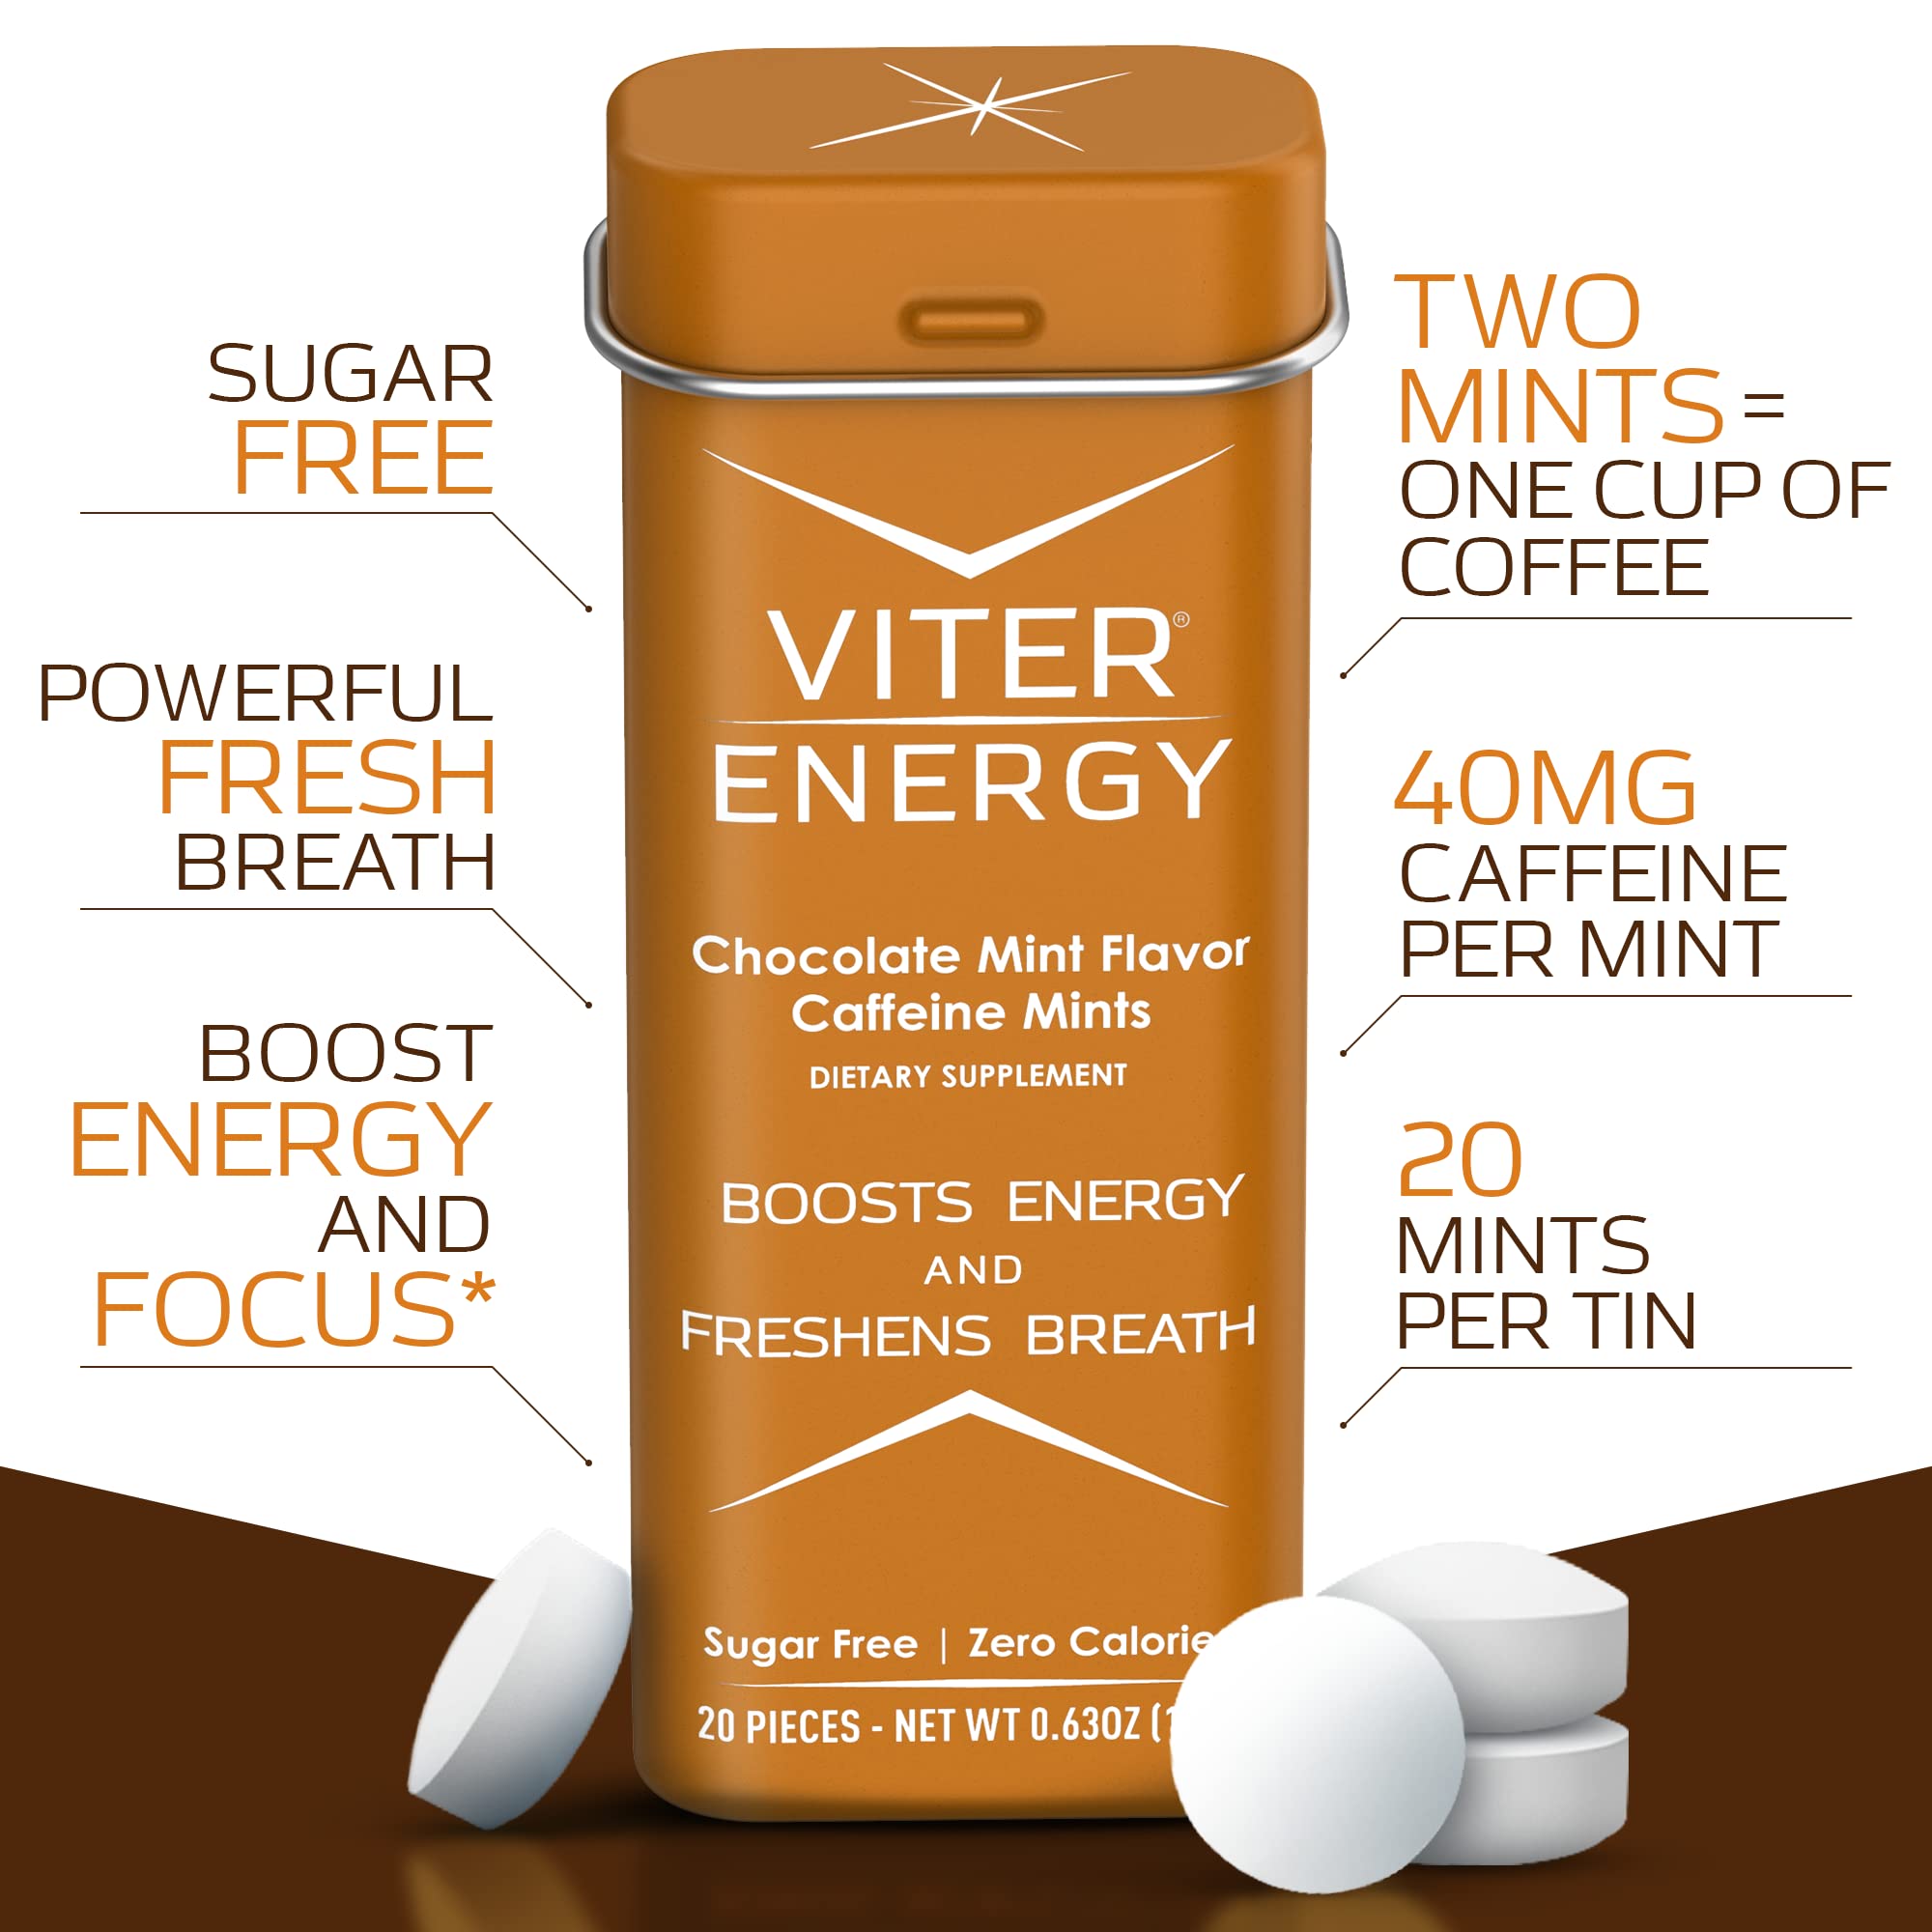 Viter Energy Original Caffeine Mints Chocolate Mint Flavor 6 Pack and 1/2 Pound Bulk Bag Bundle - 40mg Caffeine, B Vitamins, Sugar Free, Vegan, Powerful Energy Booster for Focus and Alertness